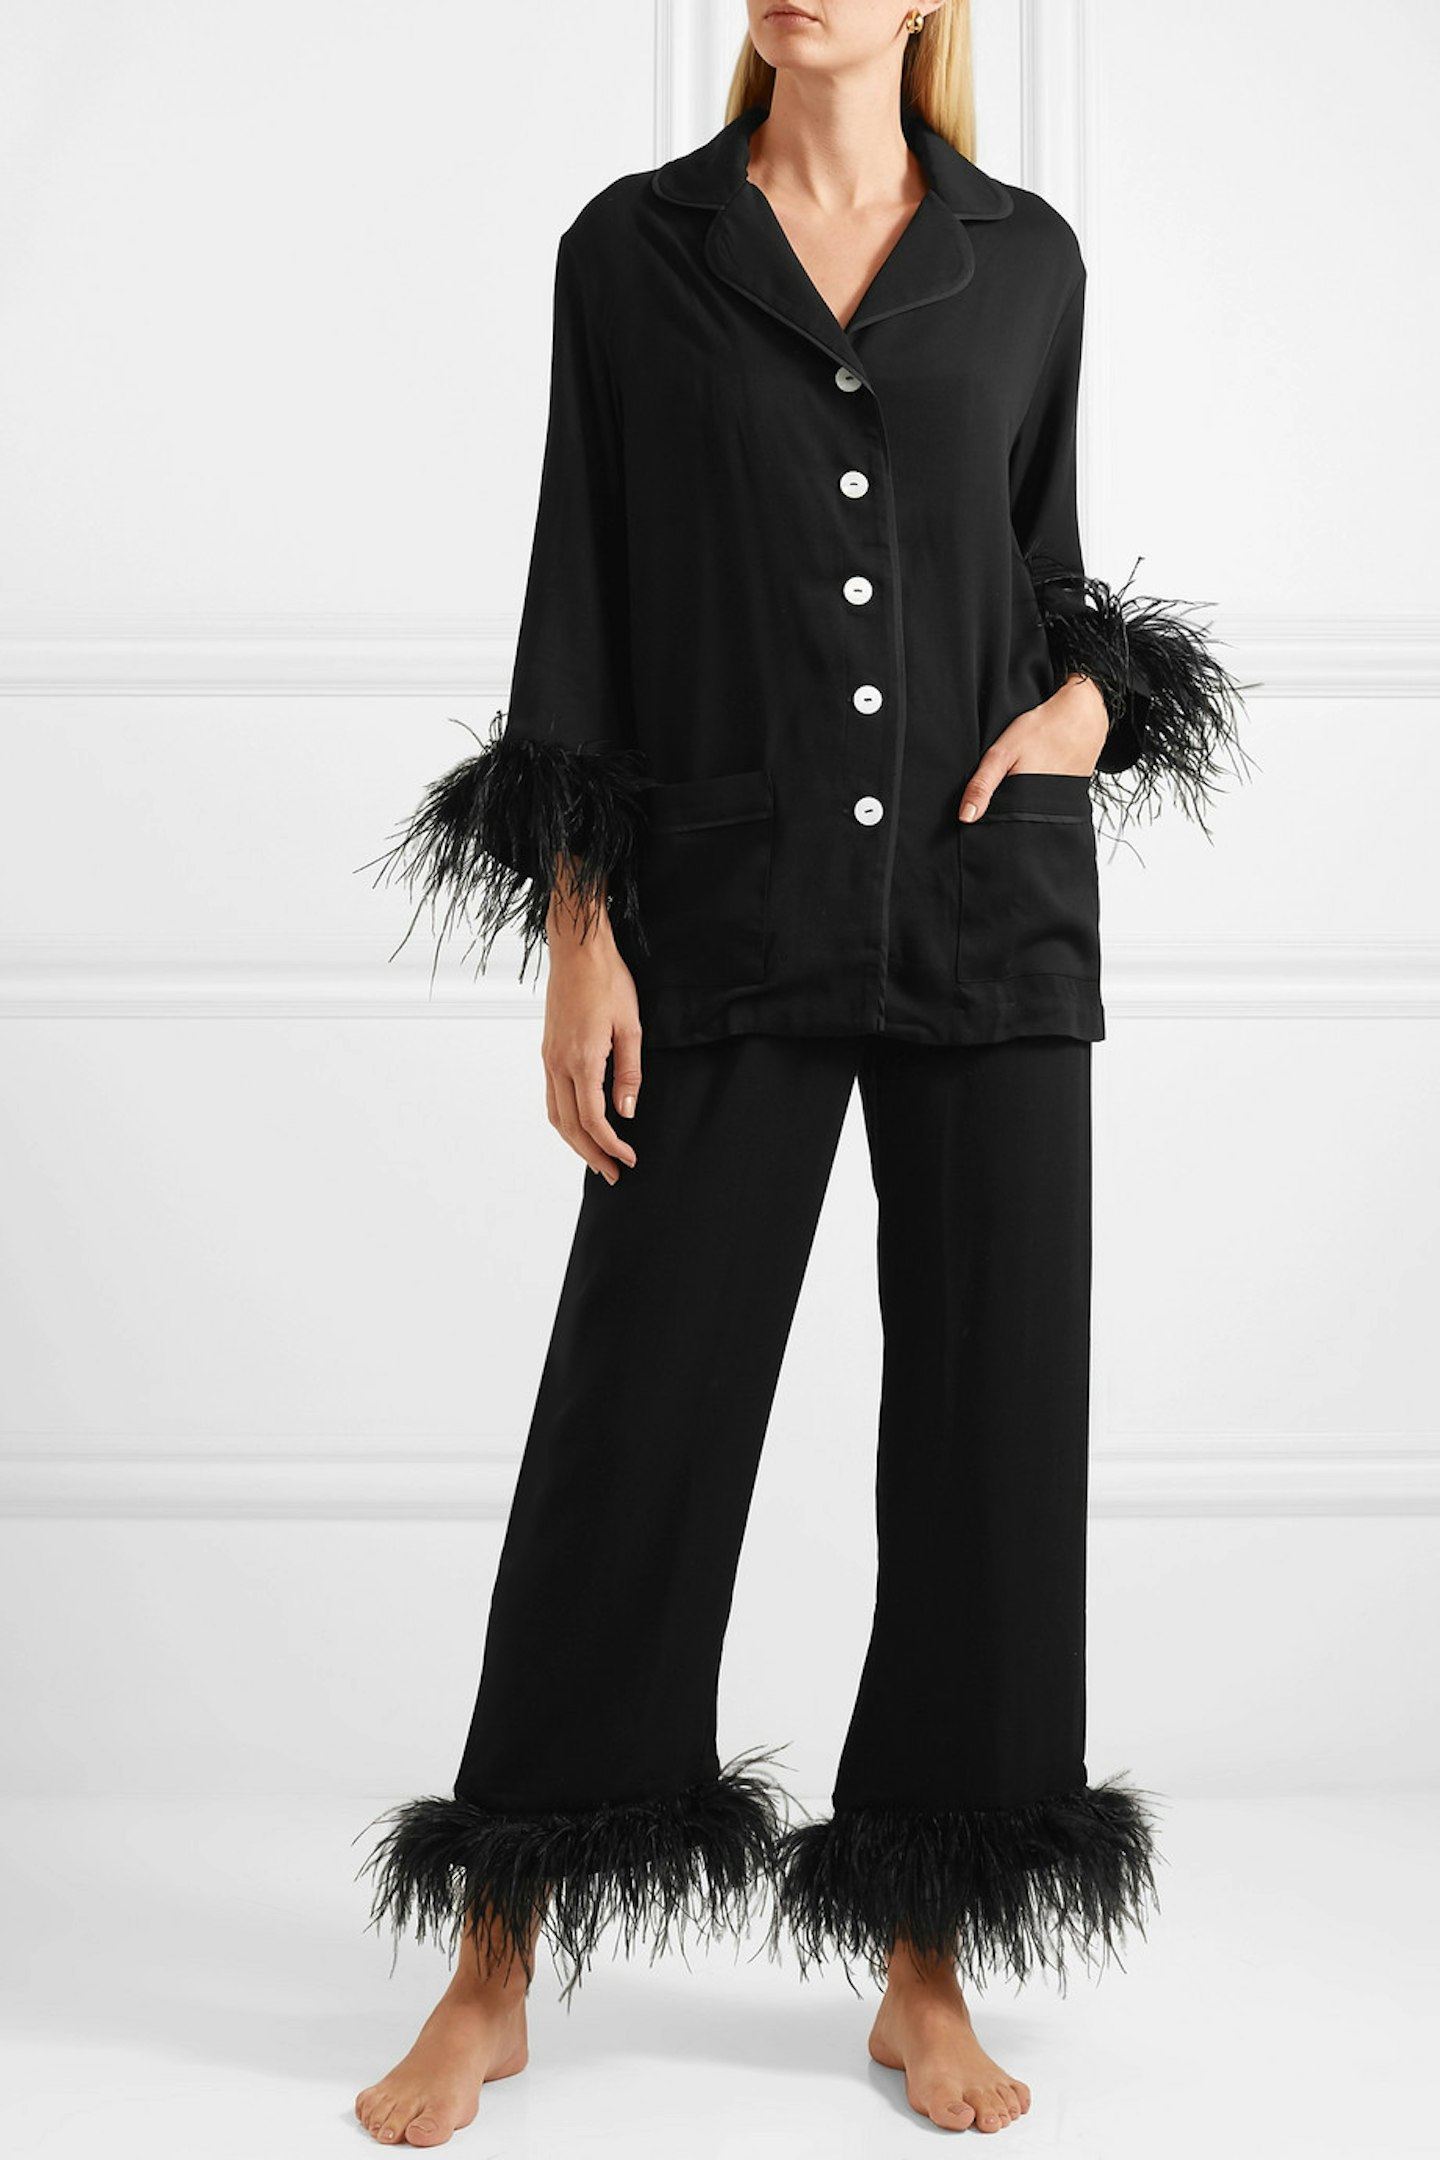 Sleeper, Black Tie feather-trimmed crepe de chine pajama set, £245